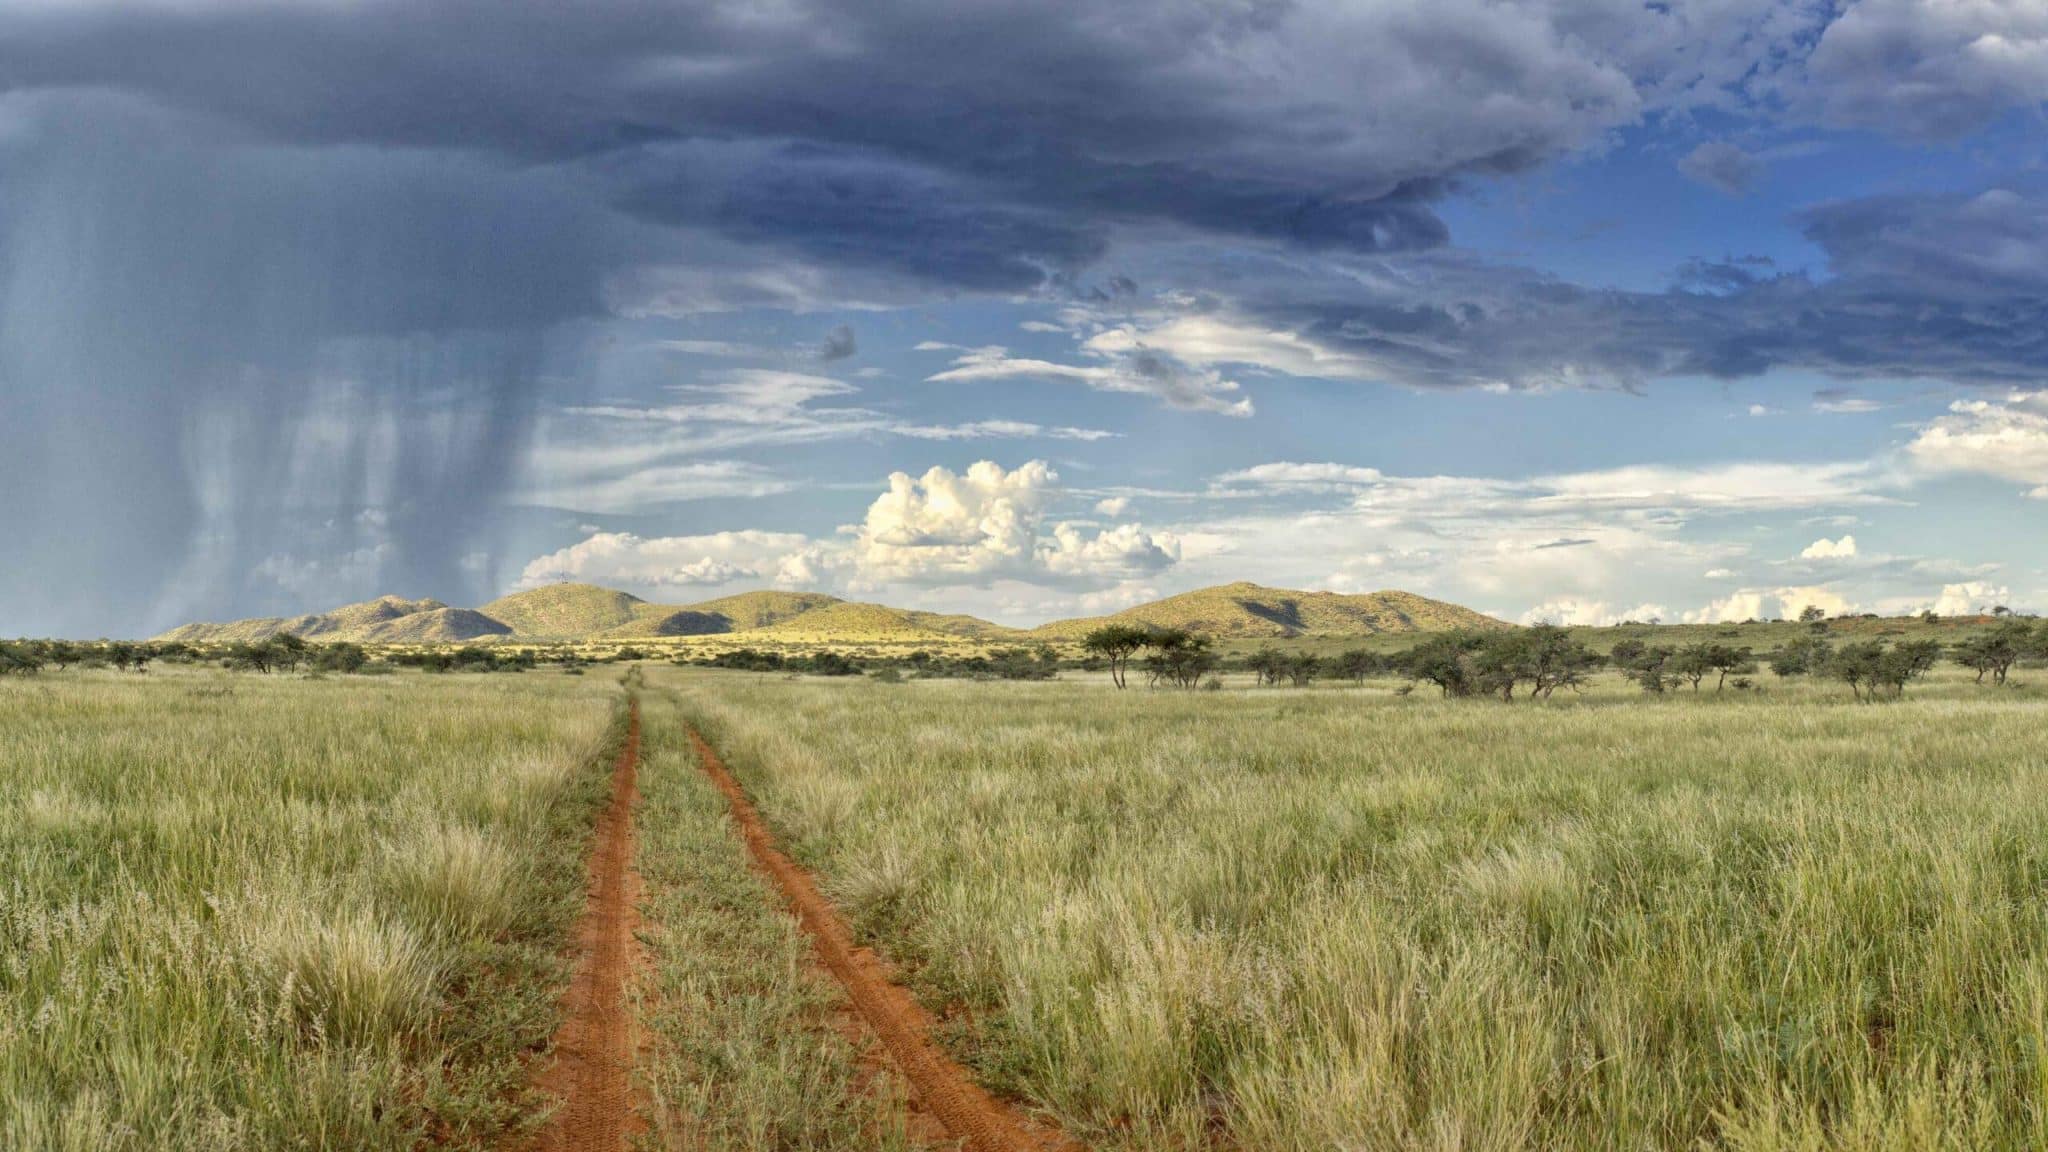 Kalahari Africa Landscape overview